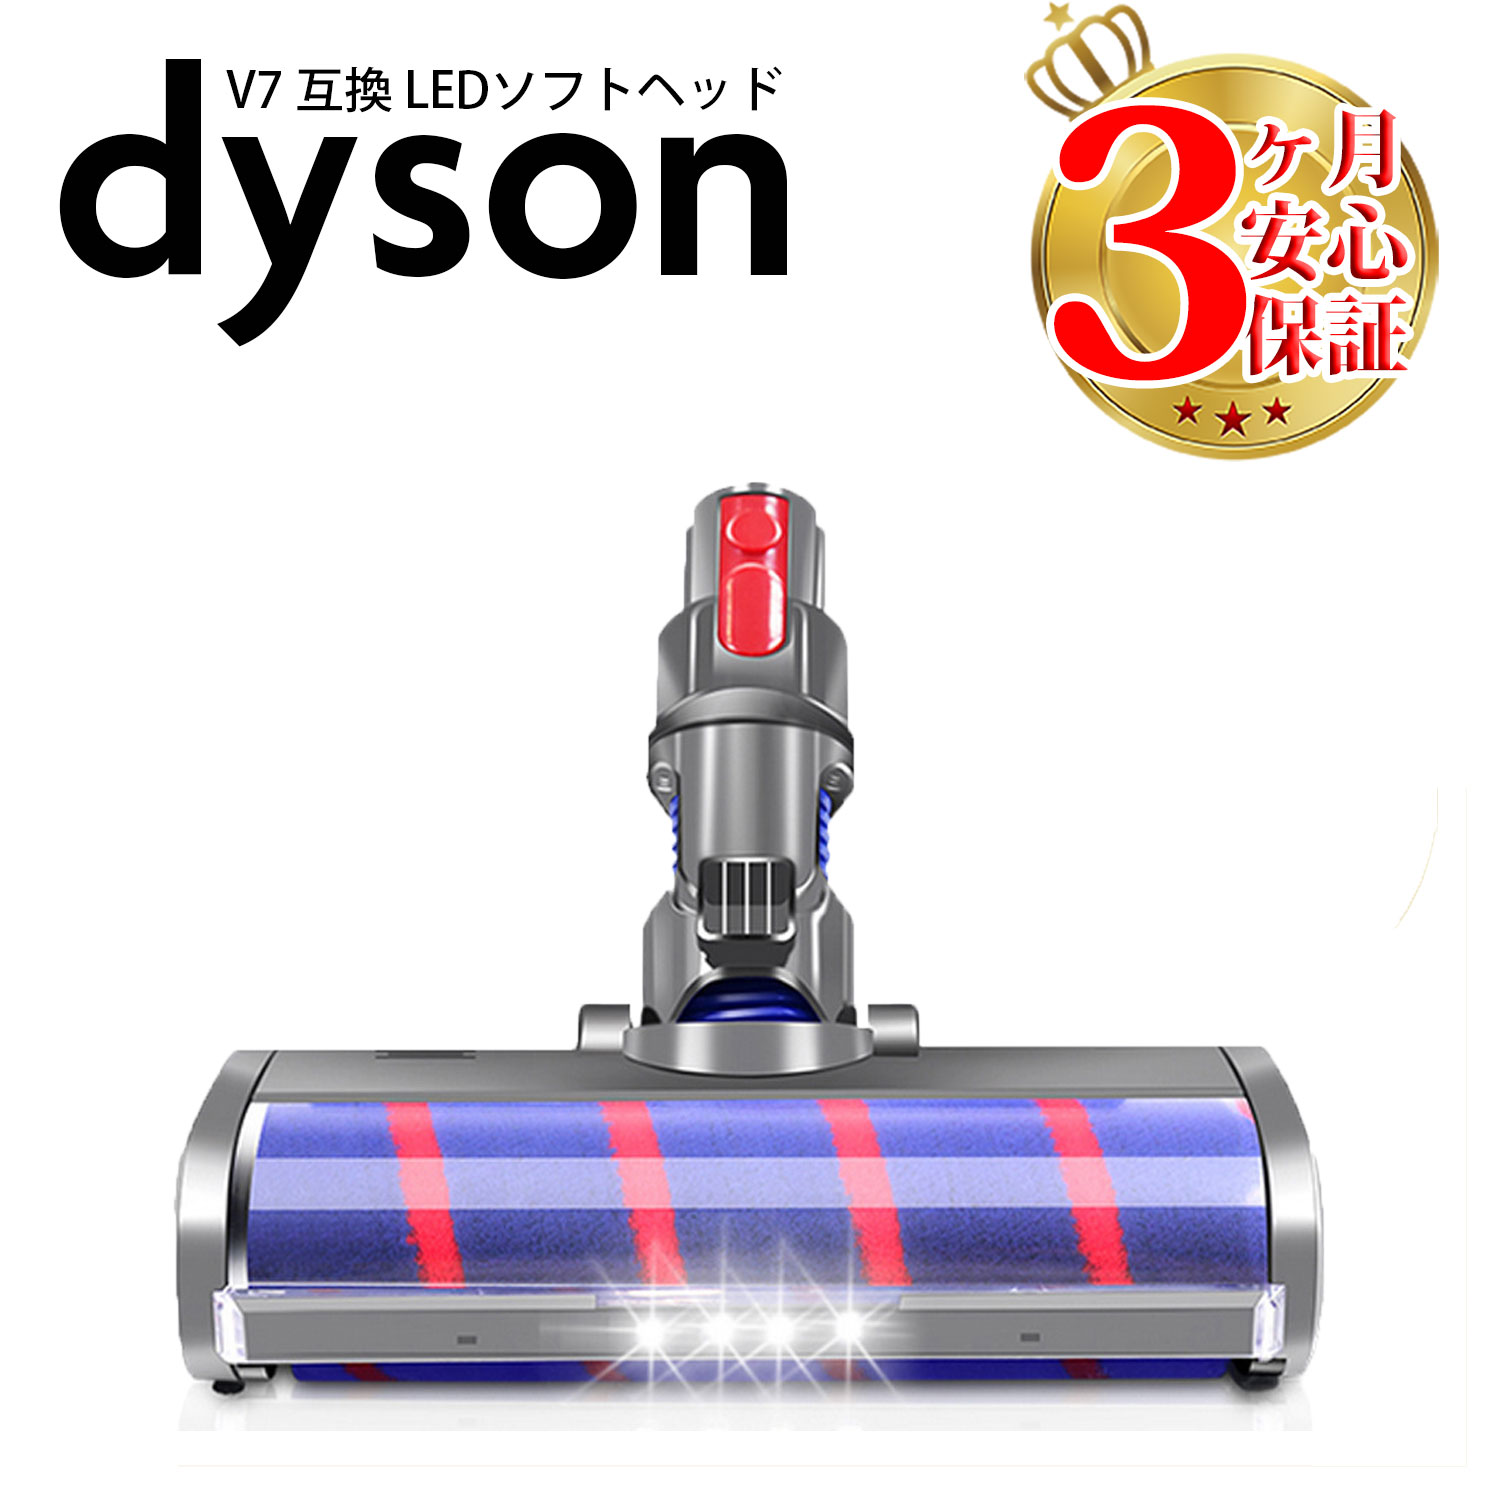 v8 slim 掃除機パーツ dyson ヘッドの人気商品・通販・価格比較 - 価格.com